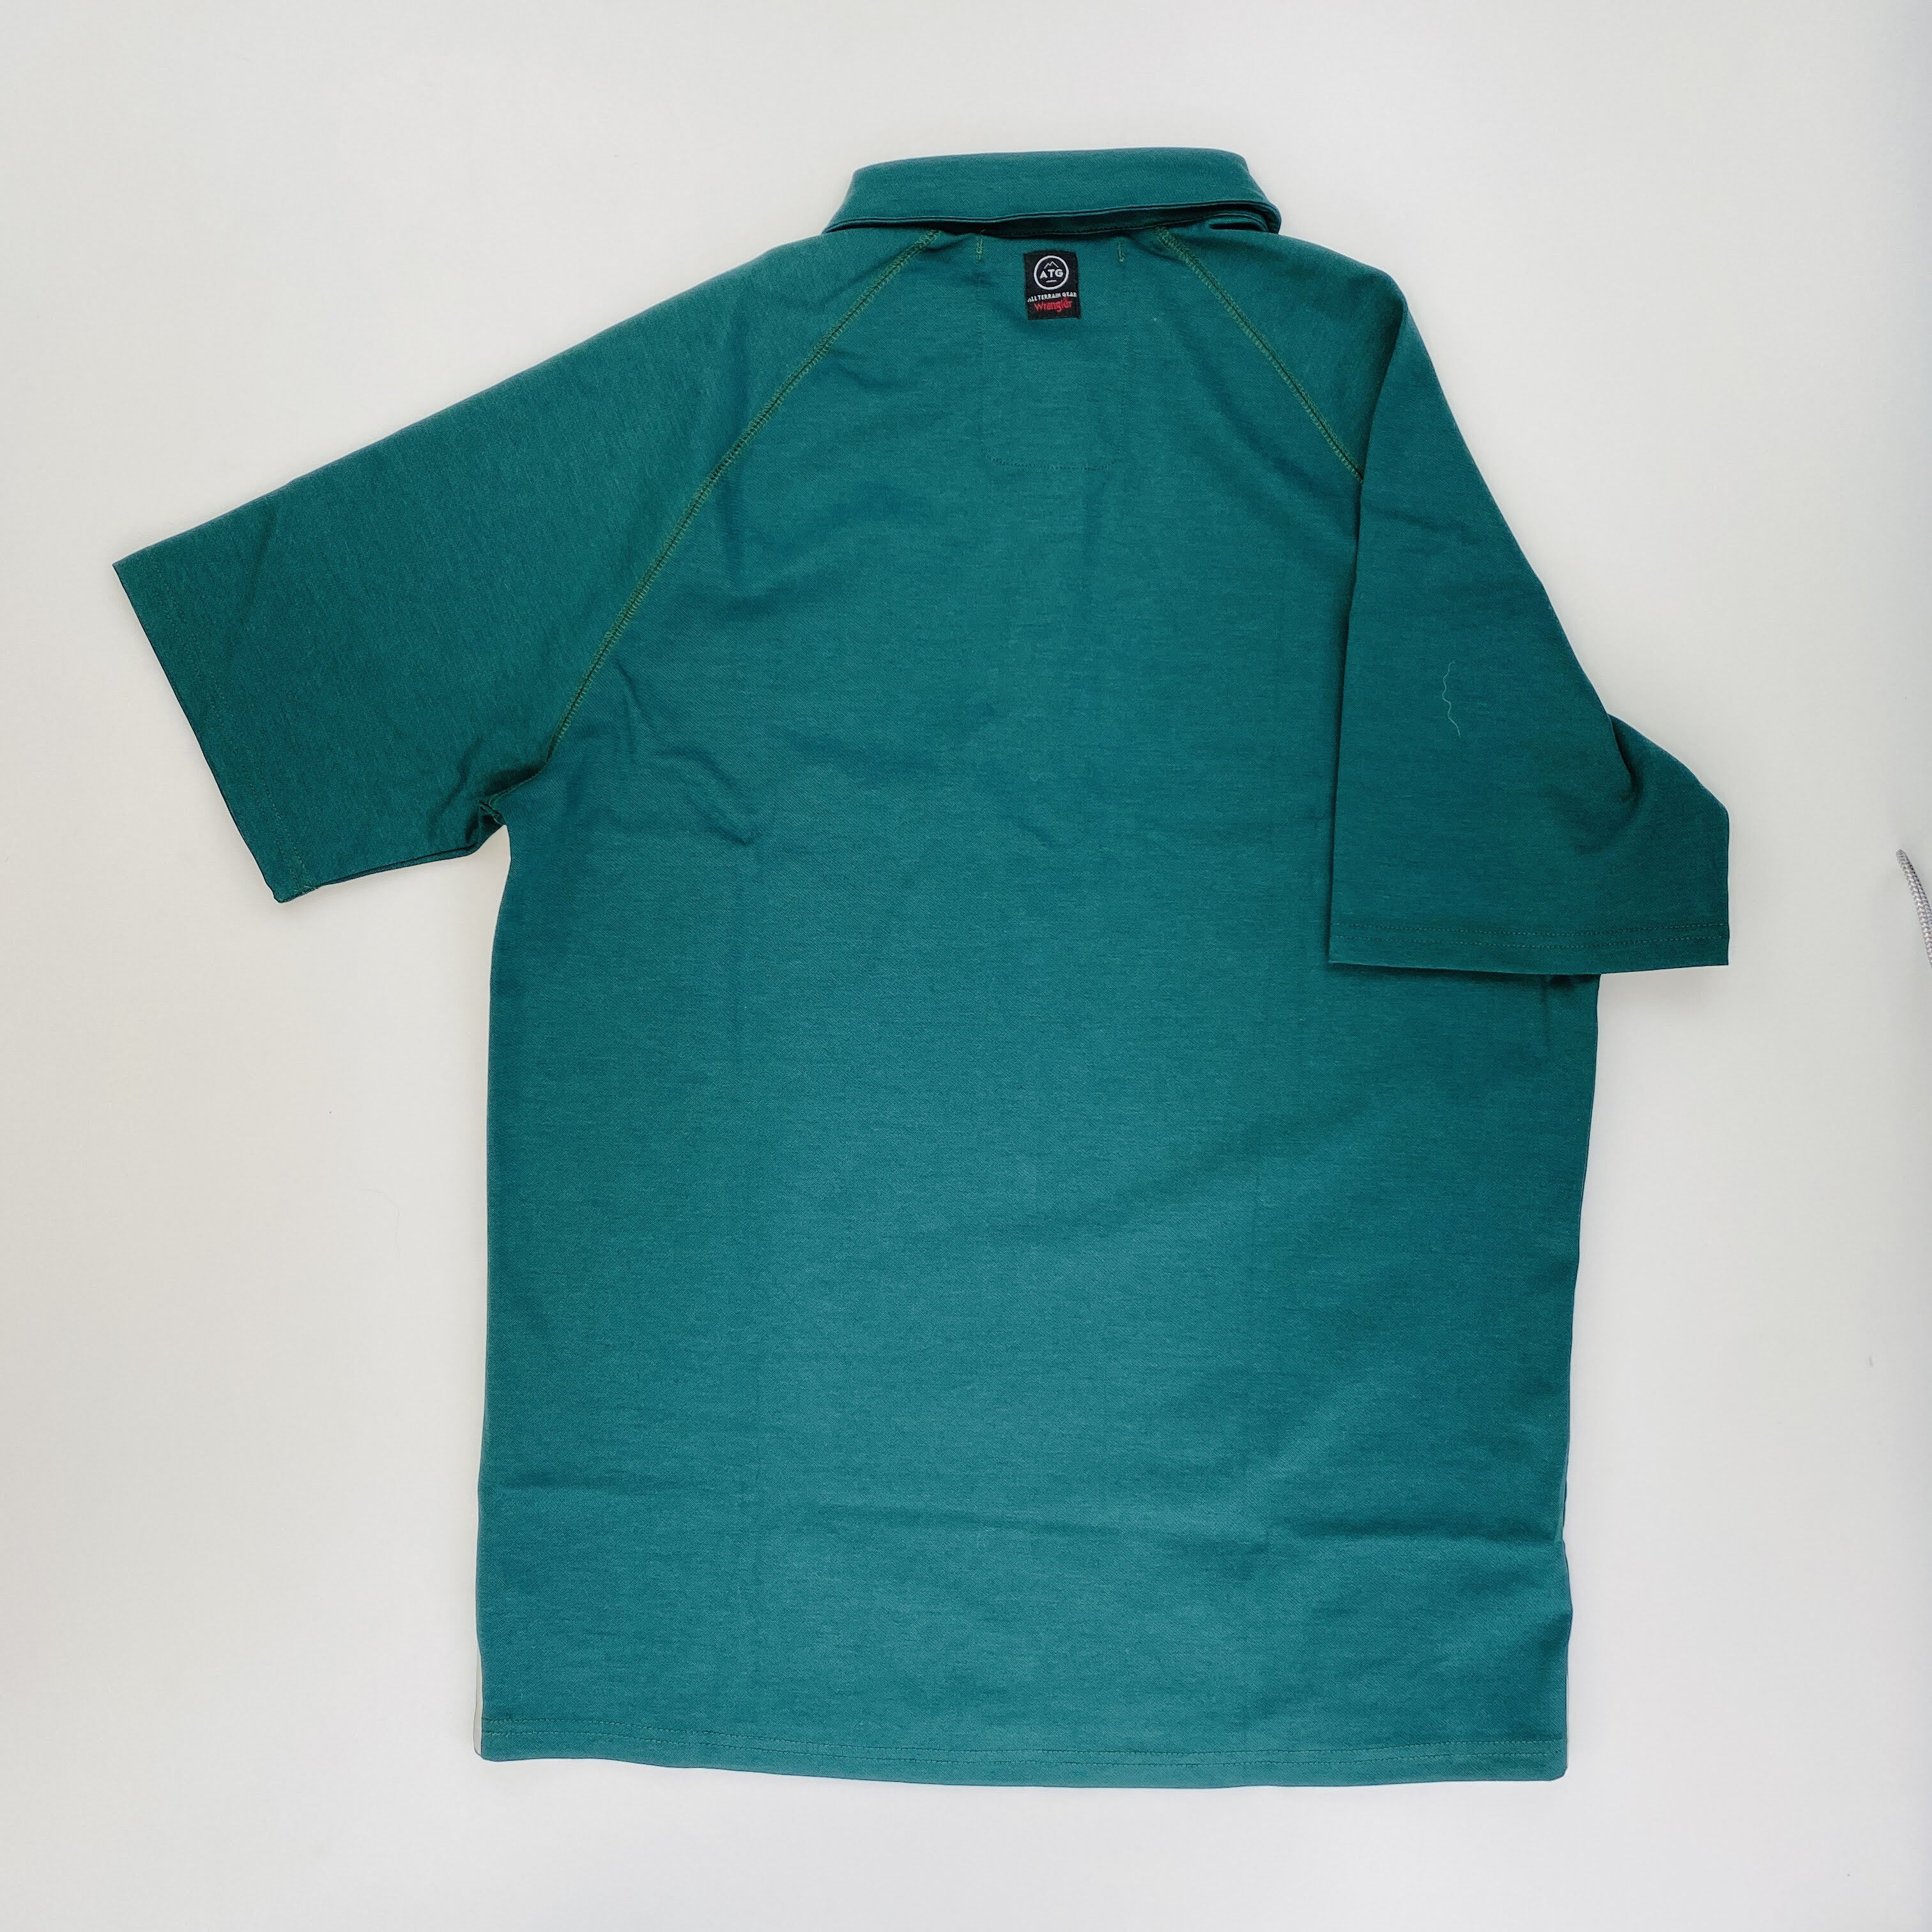 Wrangler Ss Performance Polo - Second Hand Polo shirt - Men's - Green - XL | Hardloop